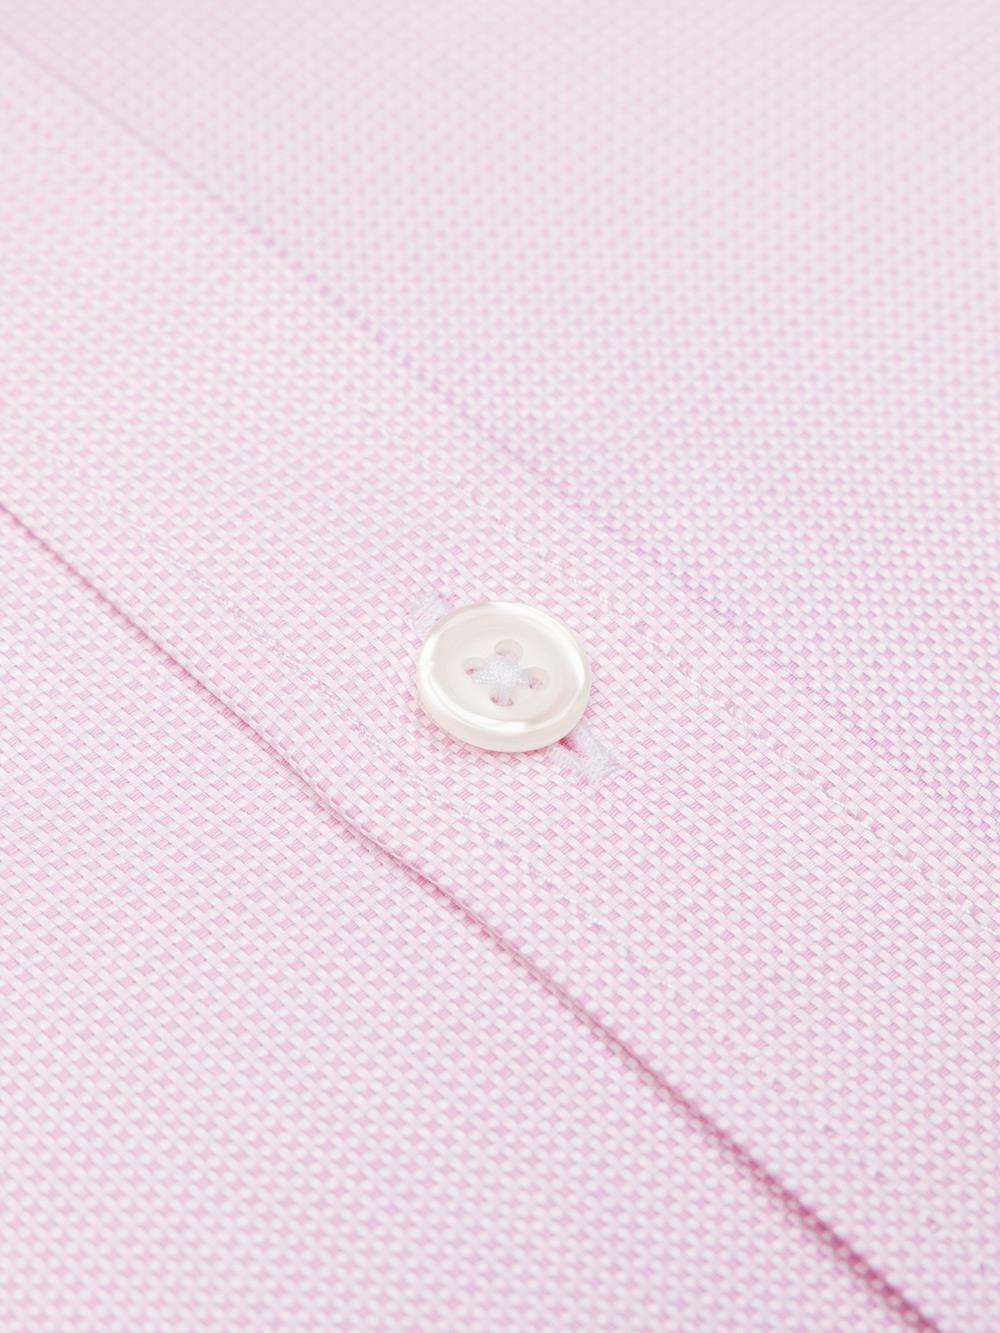 Camisa entallada trenza rosa - Doble puño